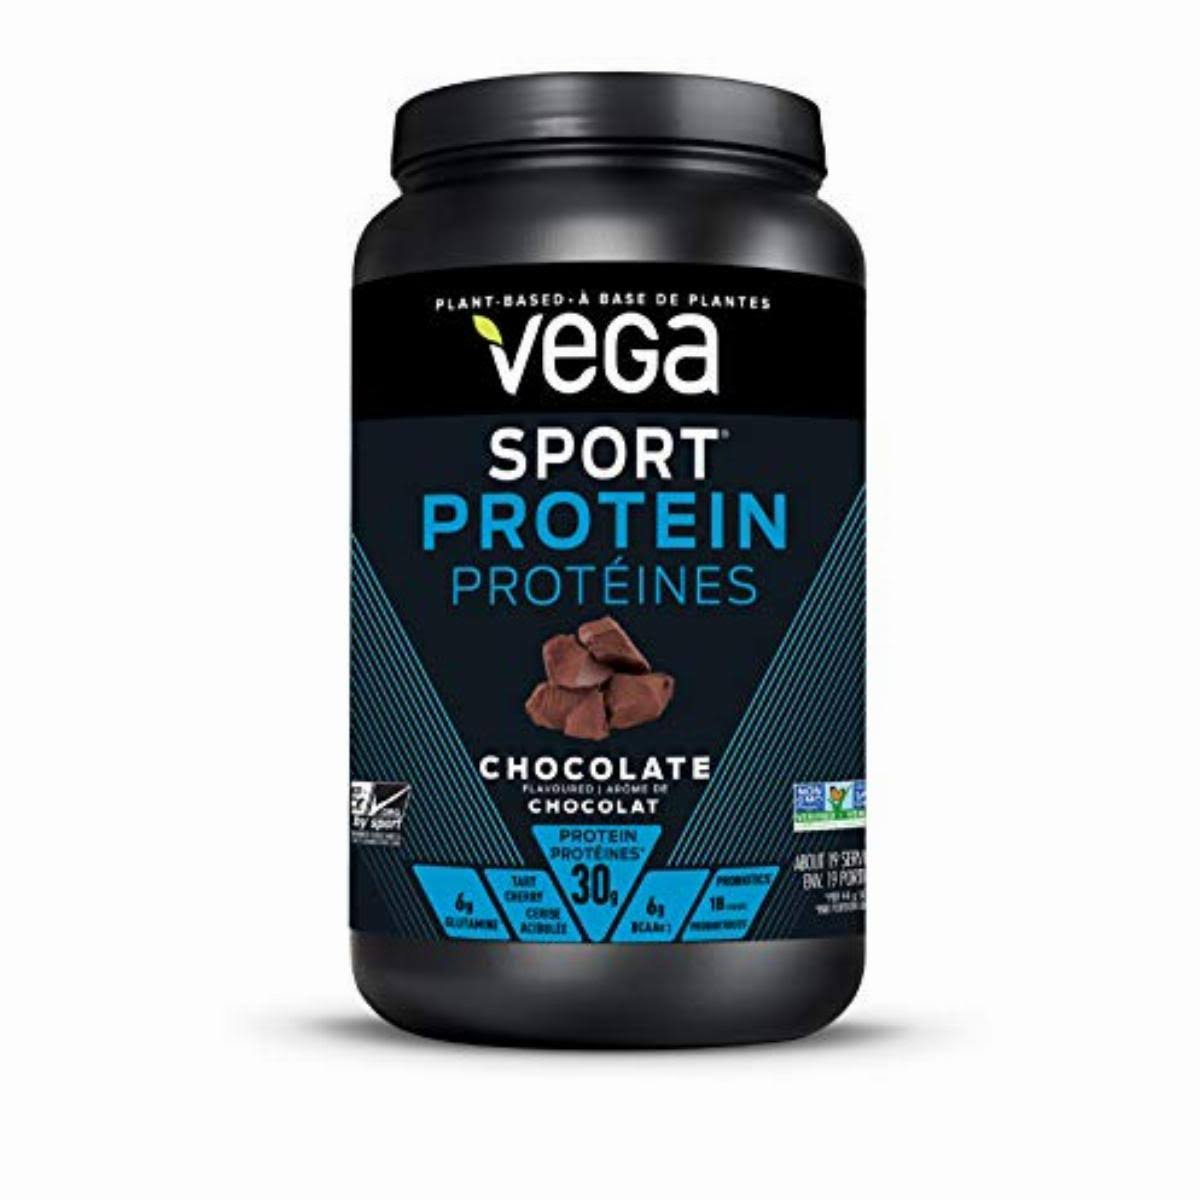 Vega Sport Performance Protein Powder Supplement - Chocolate, 837g